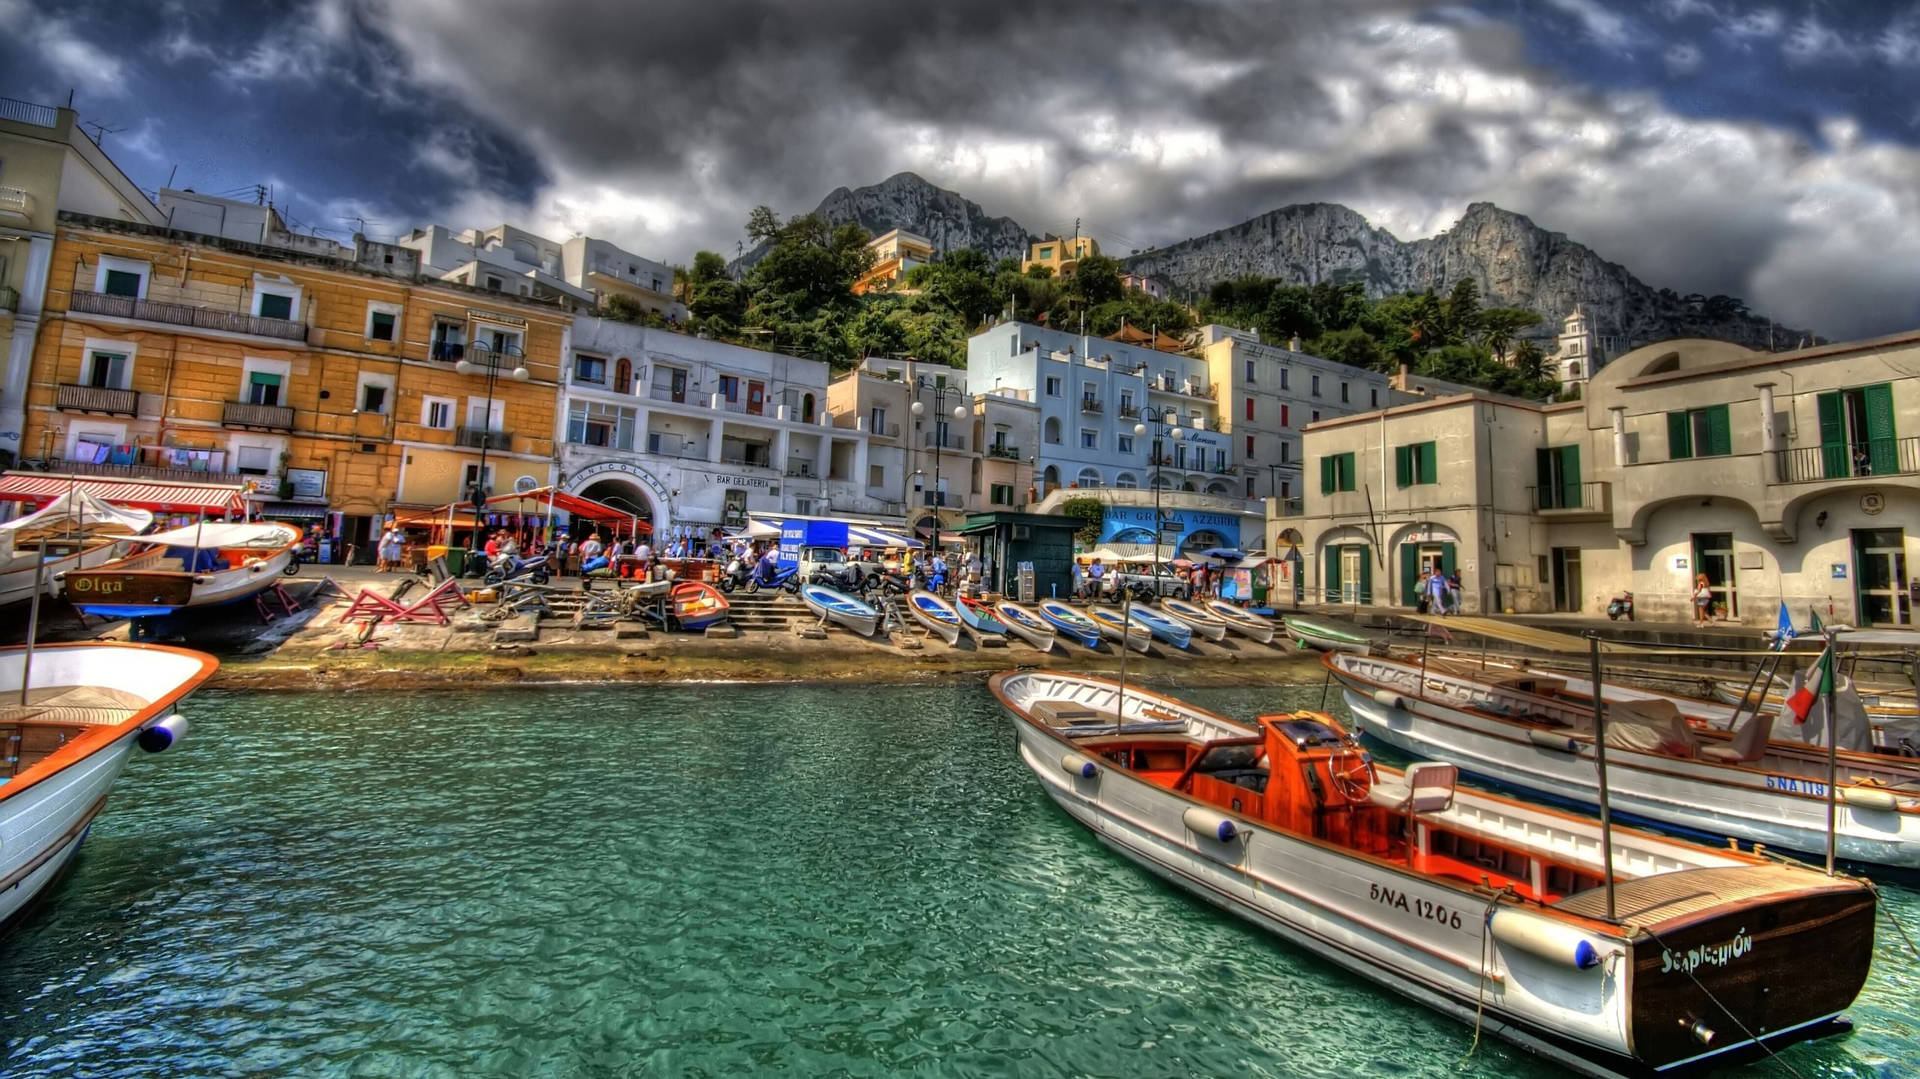 Capri Italy Beach Front With Boats